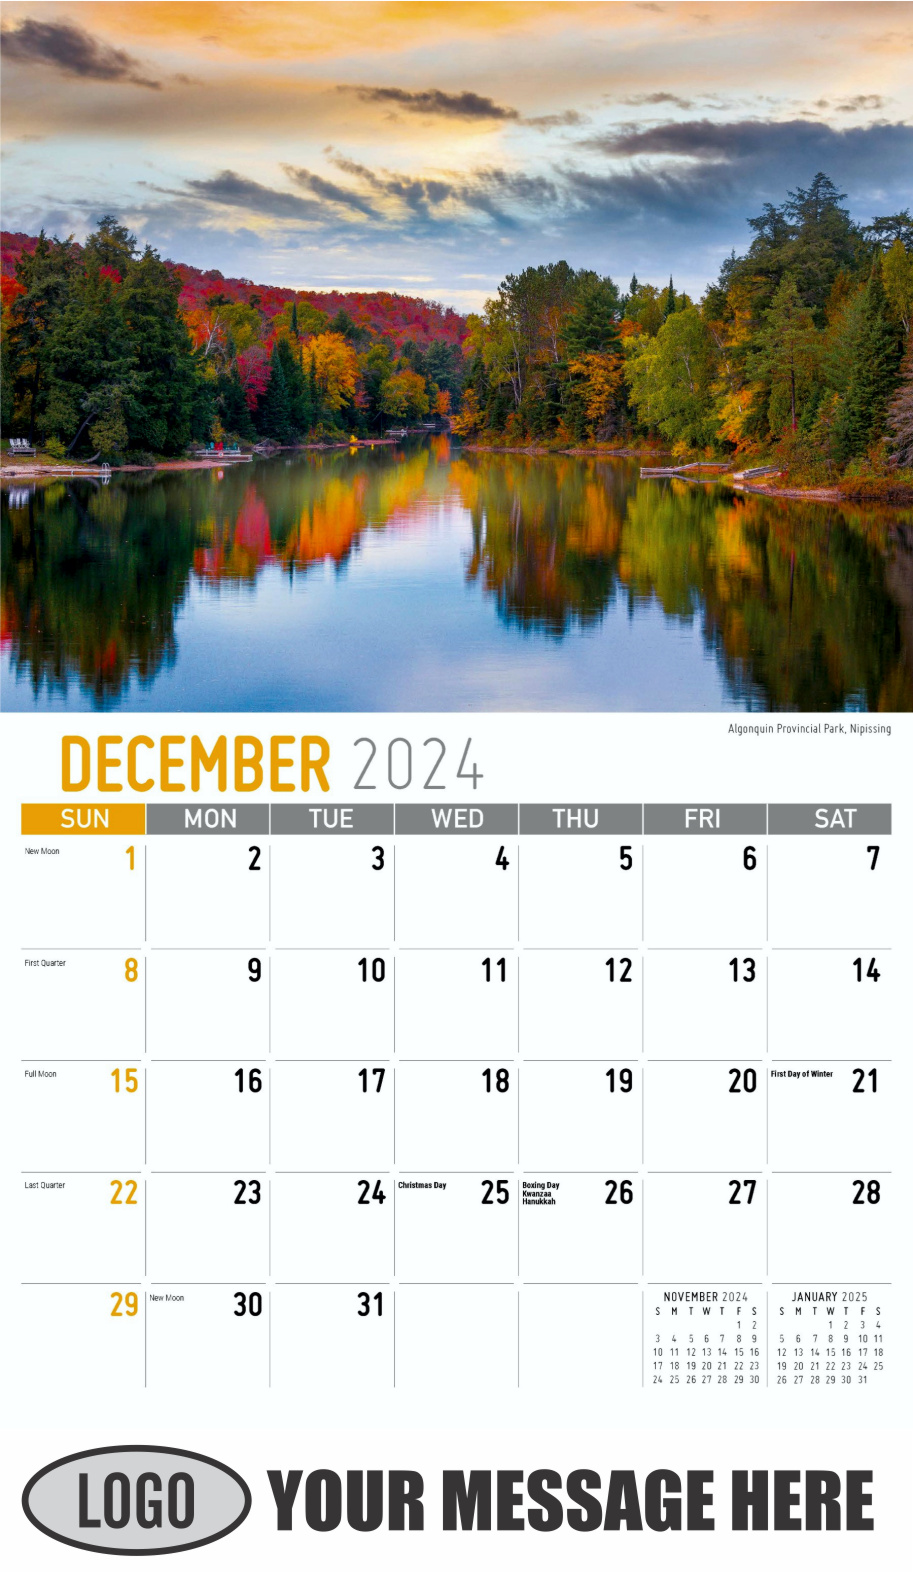 Scenes of Ontario 2024 Business Promo Wall Calendar - December